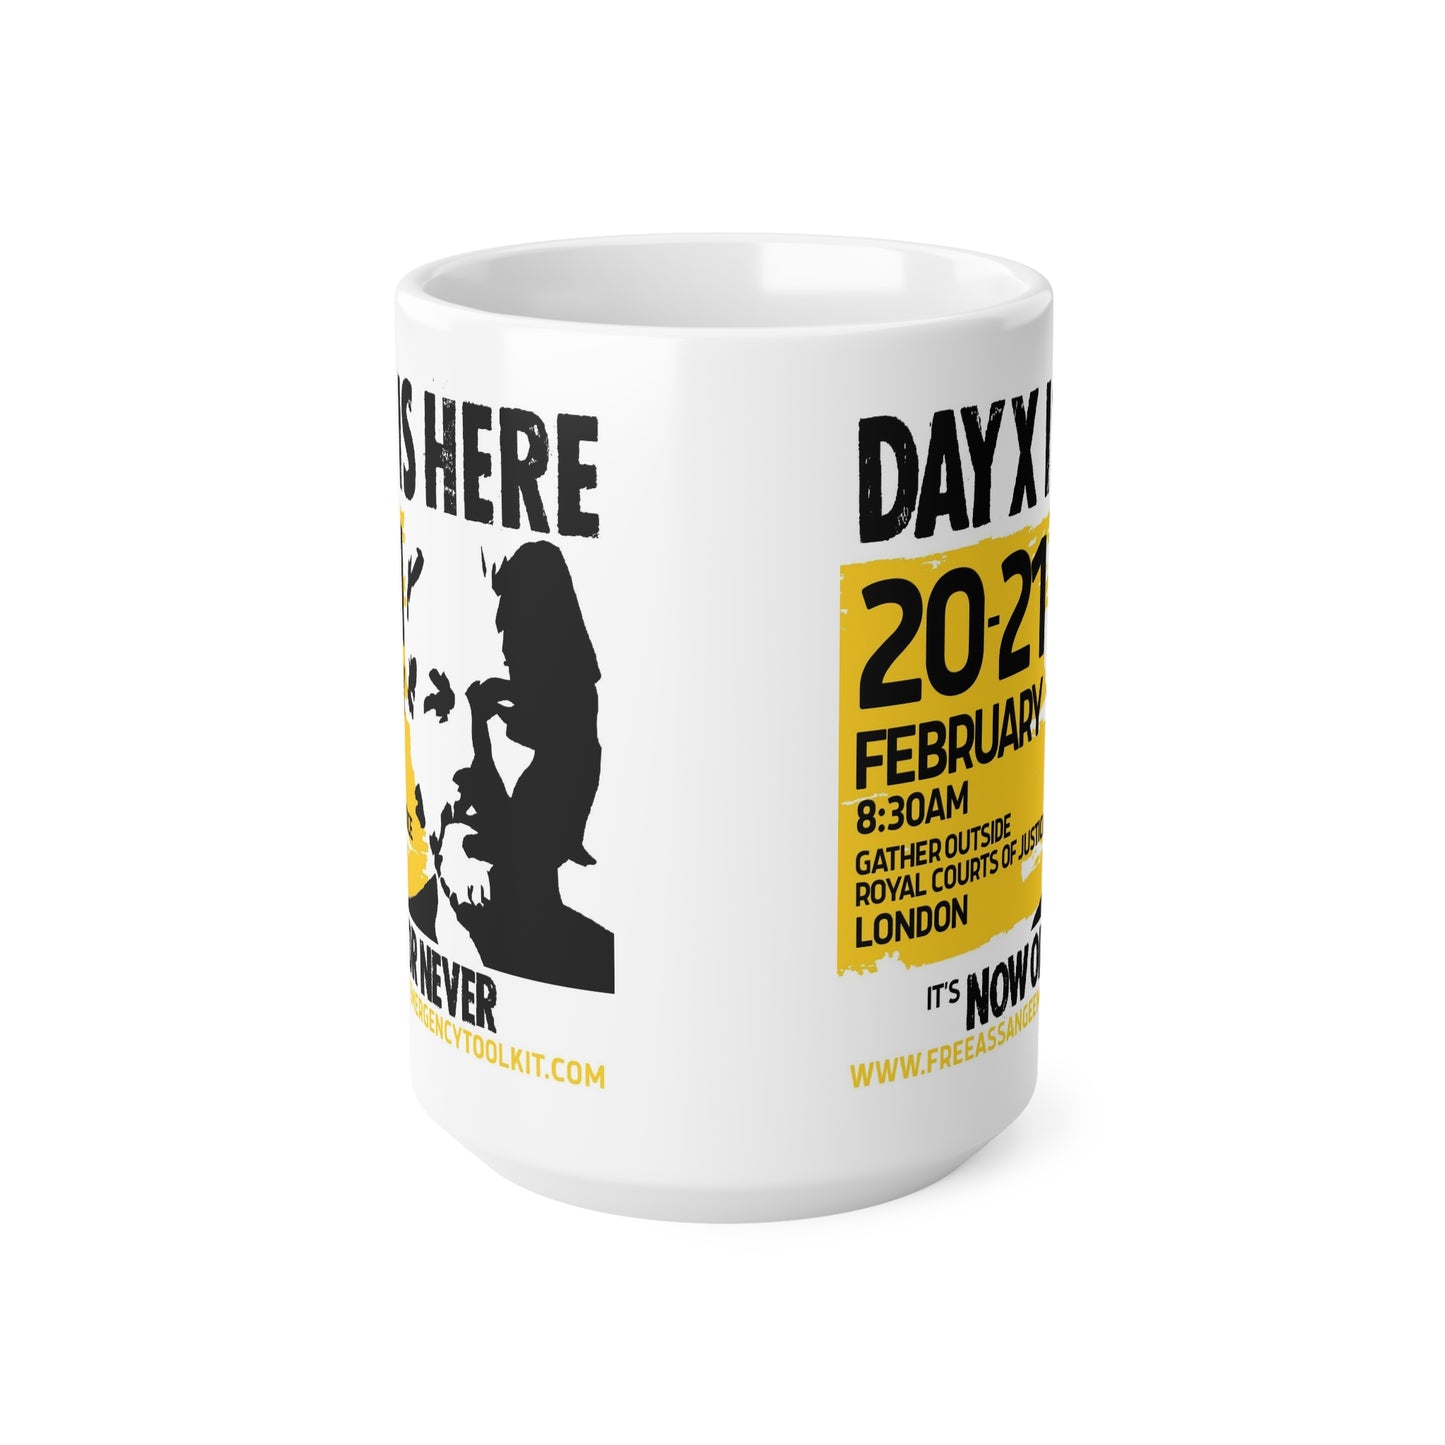 Day X is here. Ceramic Coffee Cups, 11oz, 15oz